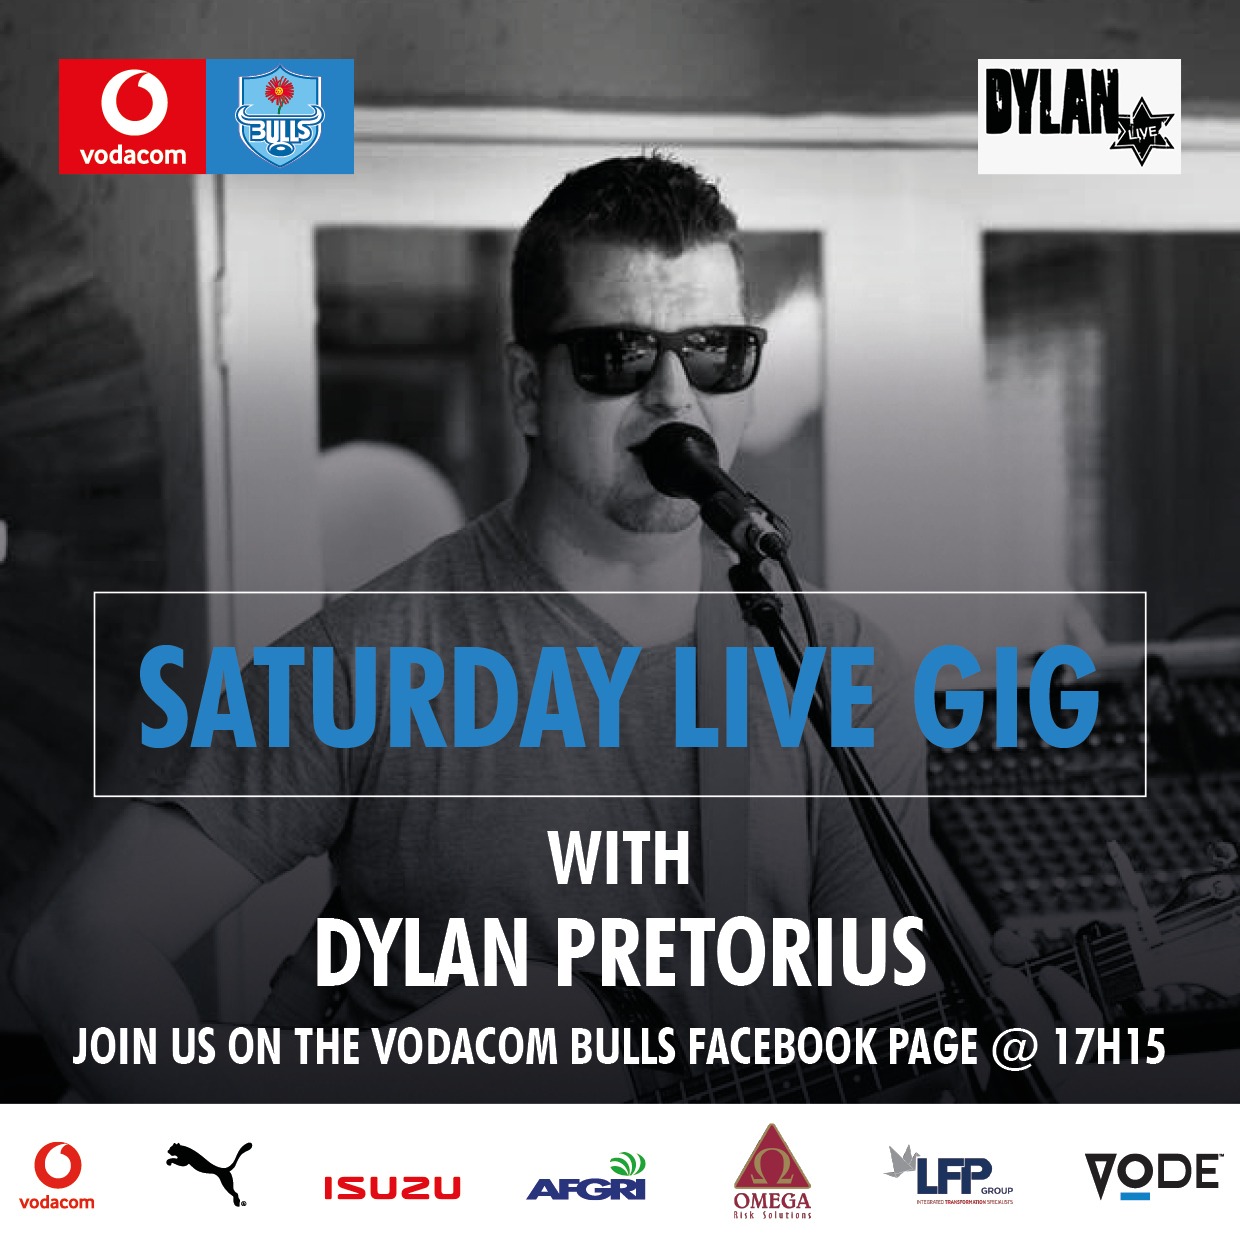 Vodacom Bulls Facebook Live concert